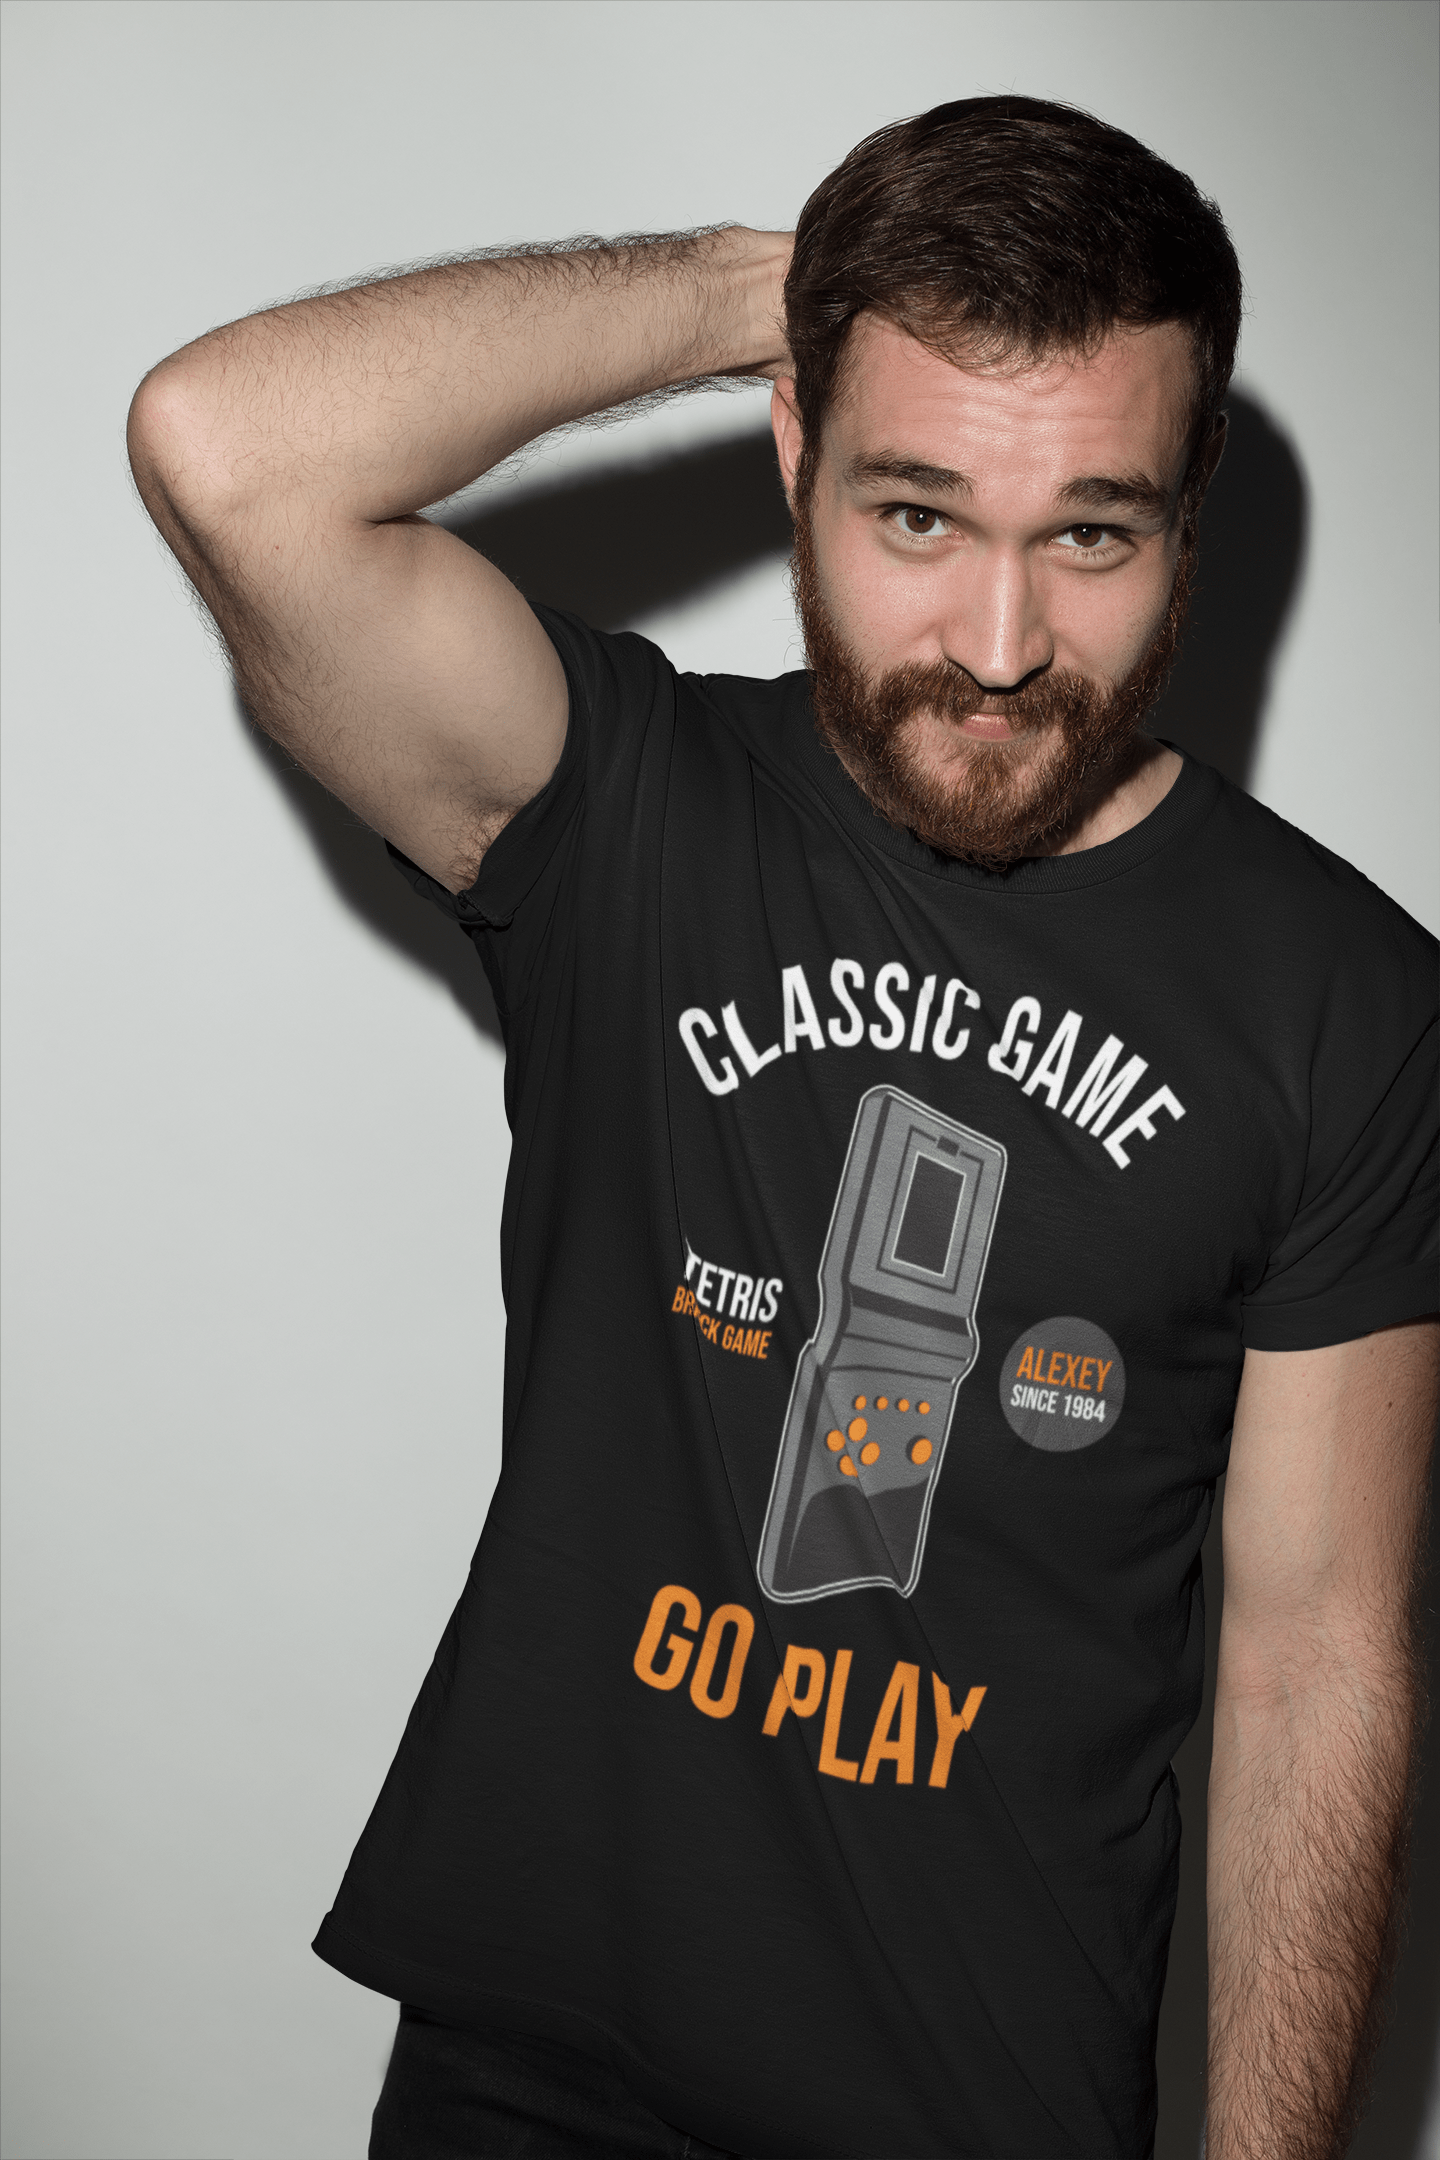 ULTRABASIC Men's Gaming T-Shirt Classic Game Go Play - Retro Gamer Tee Shirt